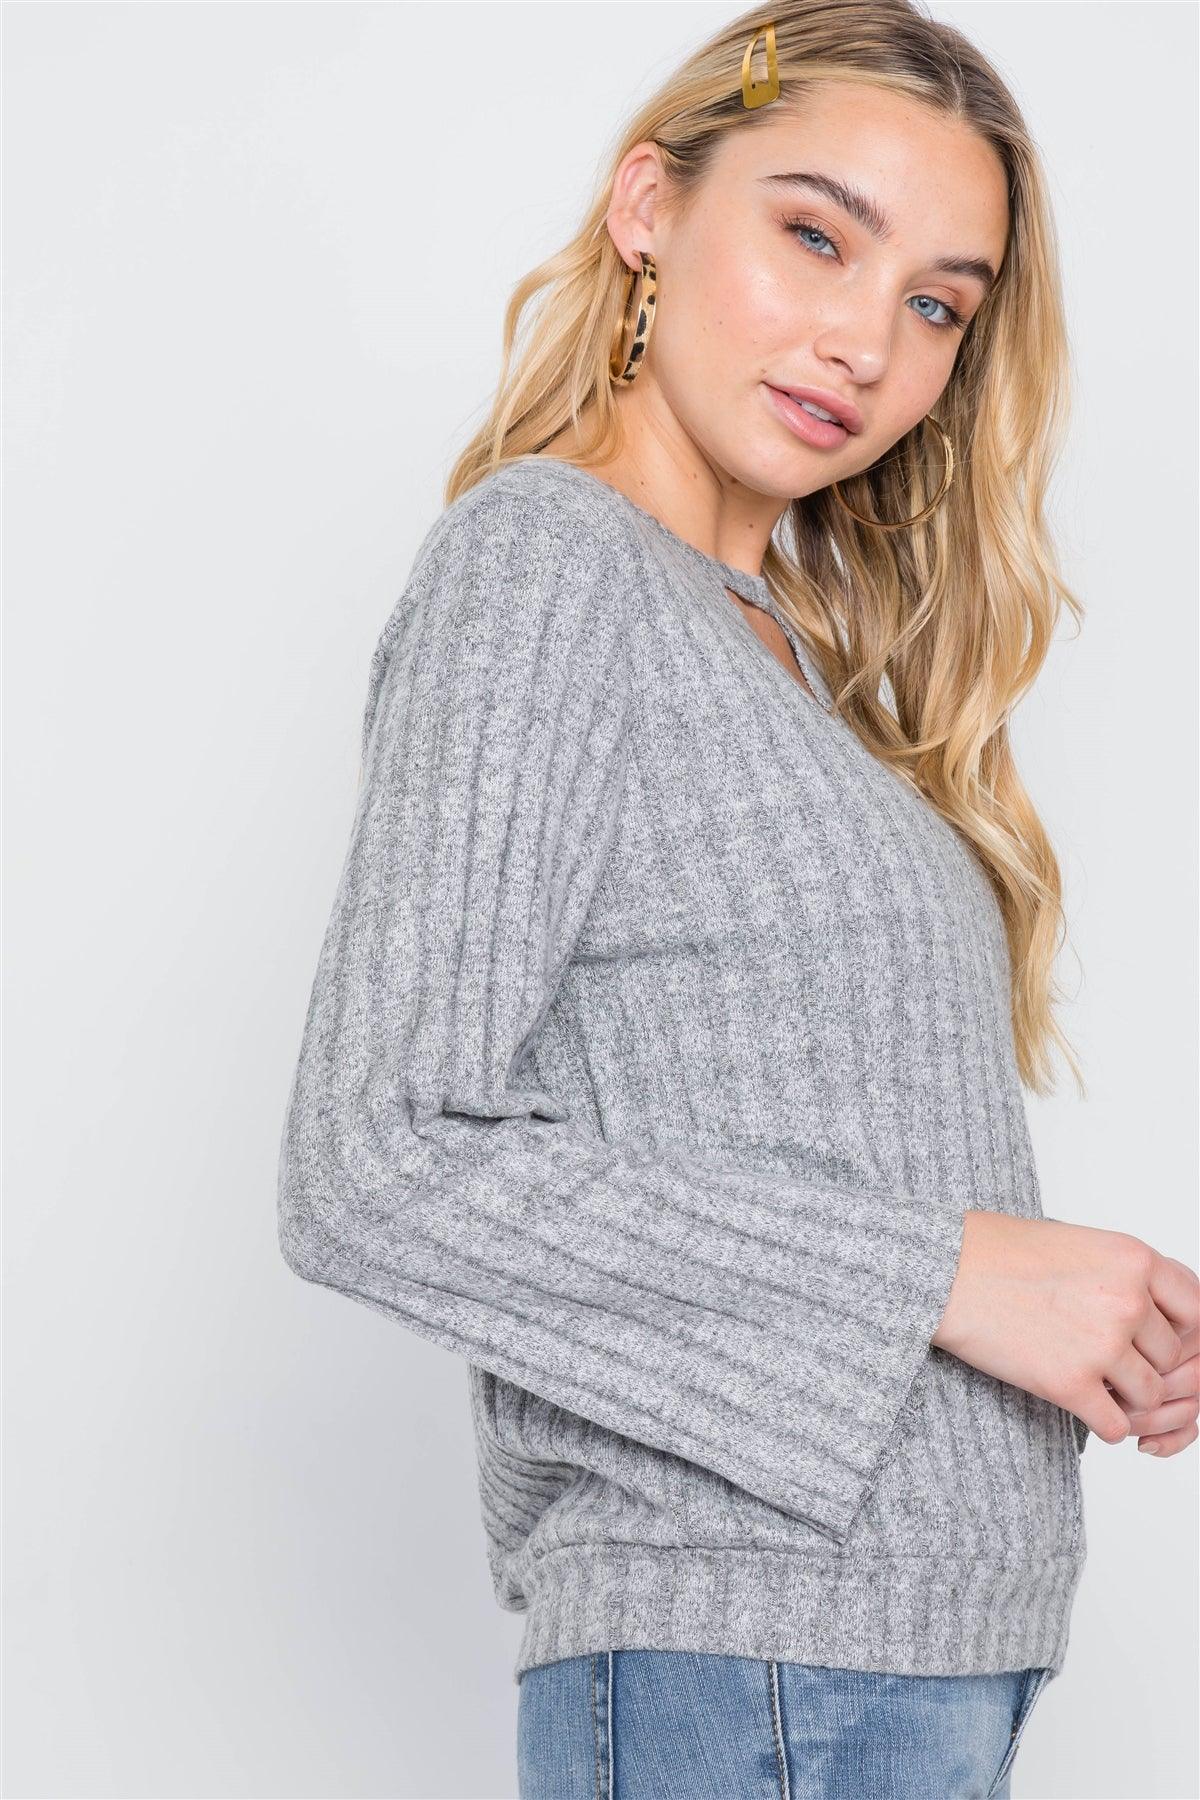 Heather Grey Knit Long Sleeve Soft Sweater /2-2-2